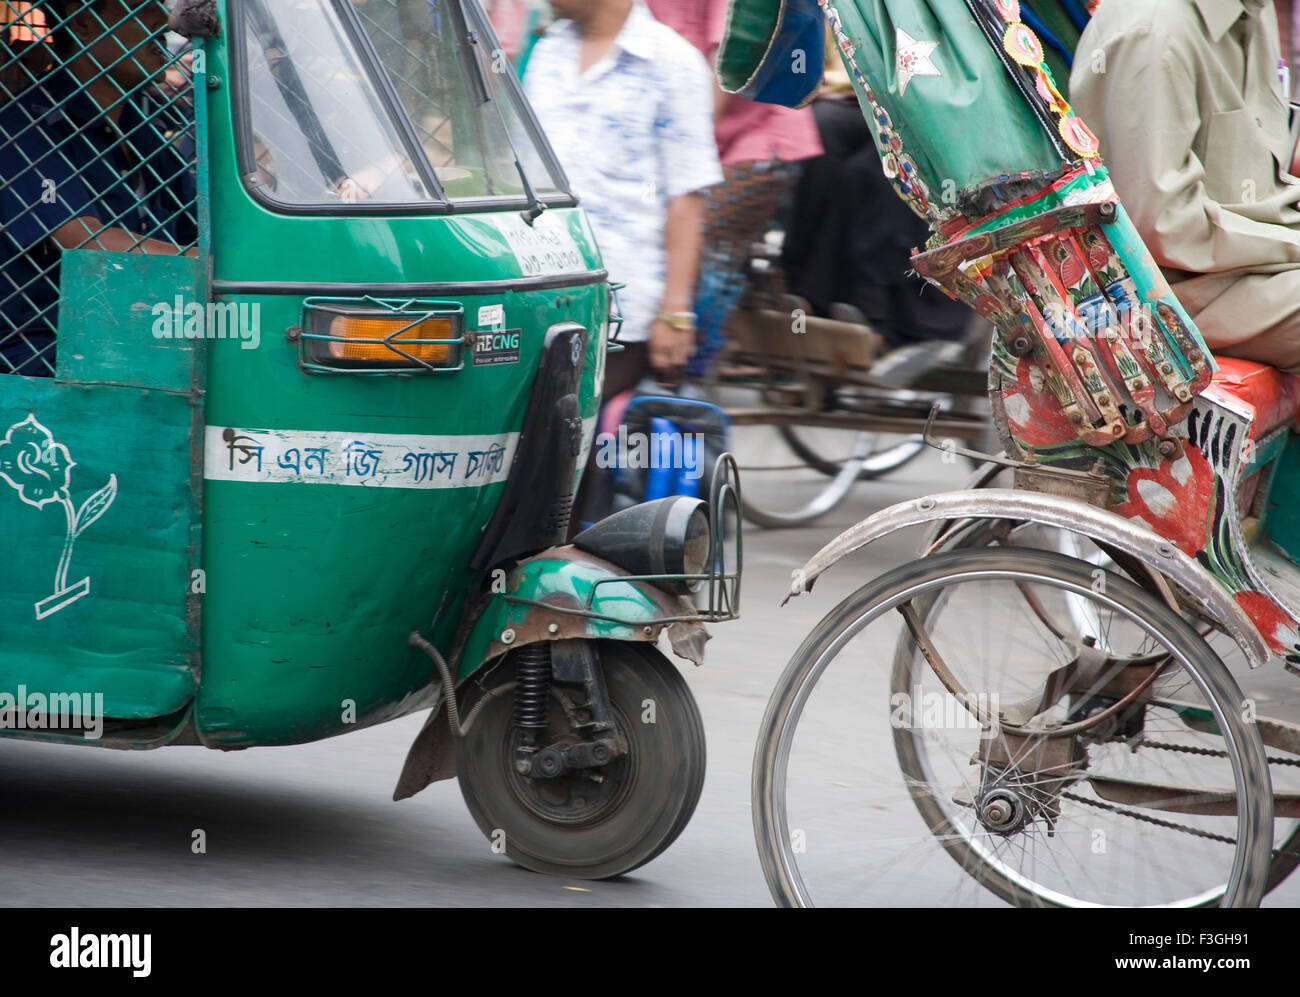 Auto-Rikscha und Zyklus Rickshaw mit Passagiere Chaos Straßenszene in Dhaka; Bangladesch Stockfoto